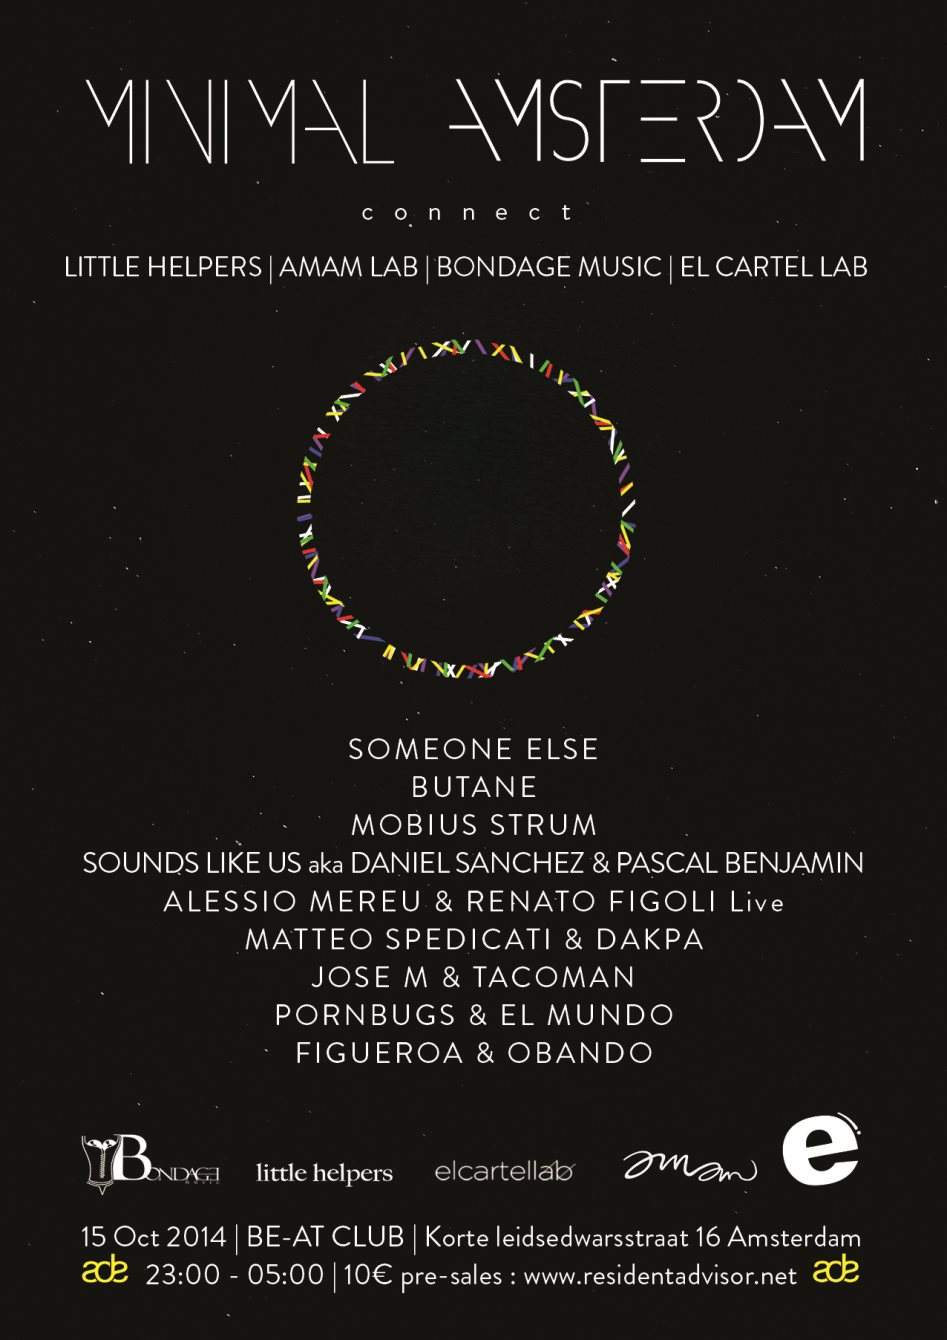 Minimal Amsterdam Connect: Little Helpers, Amam, Bondage Music, El Cartel Lab - フライヤー表